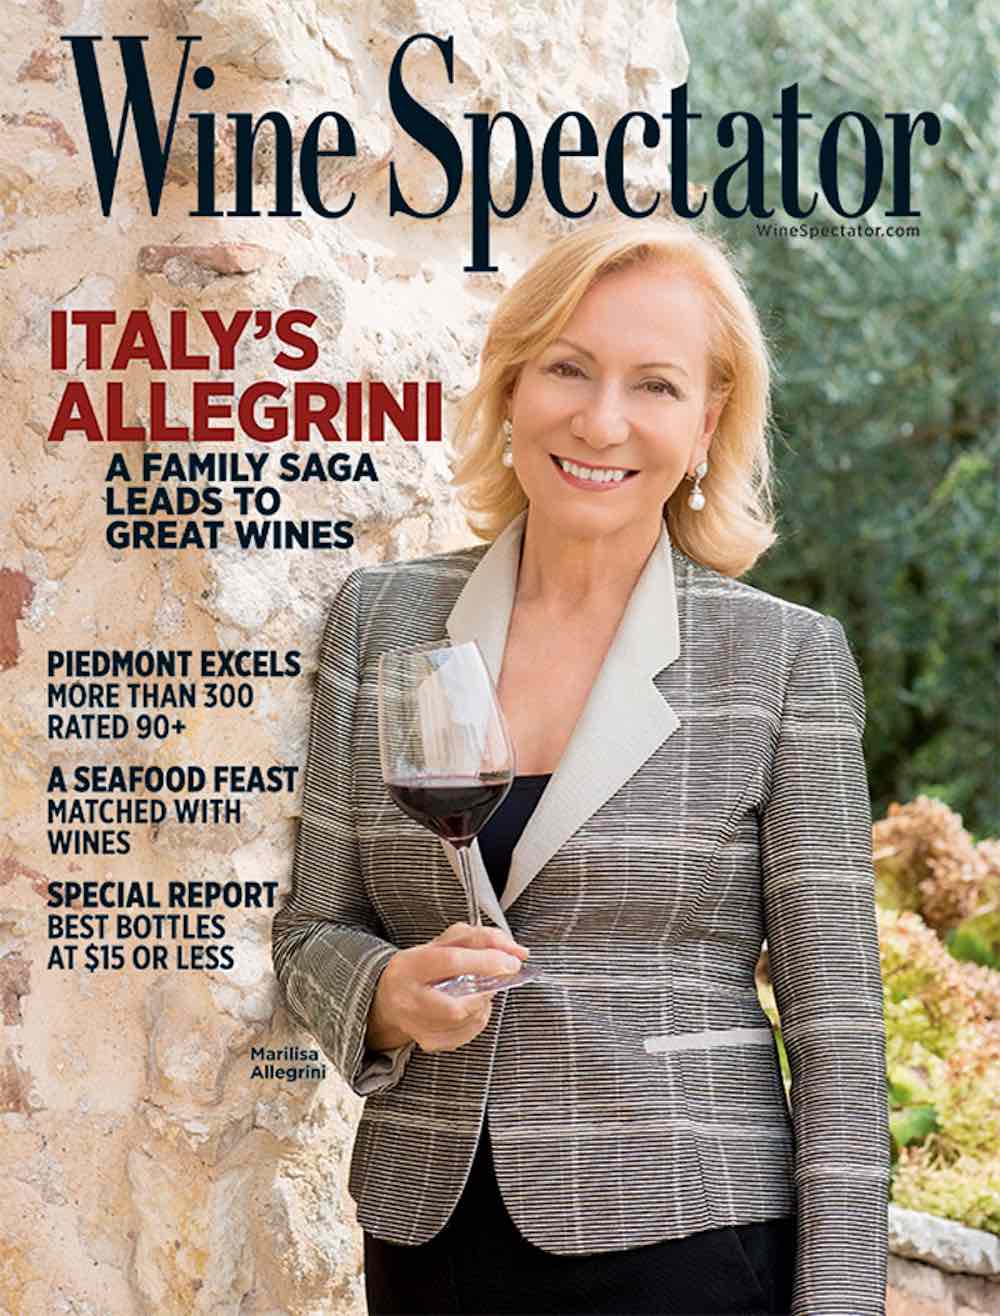 La copertina del Wine Spectator dedicata a Marilisa Allegrini